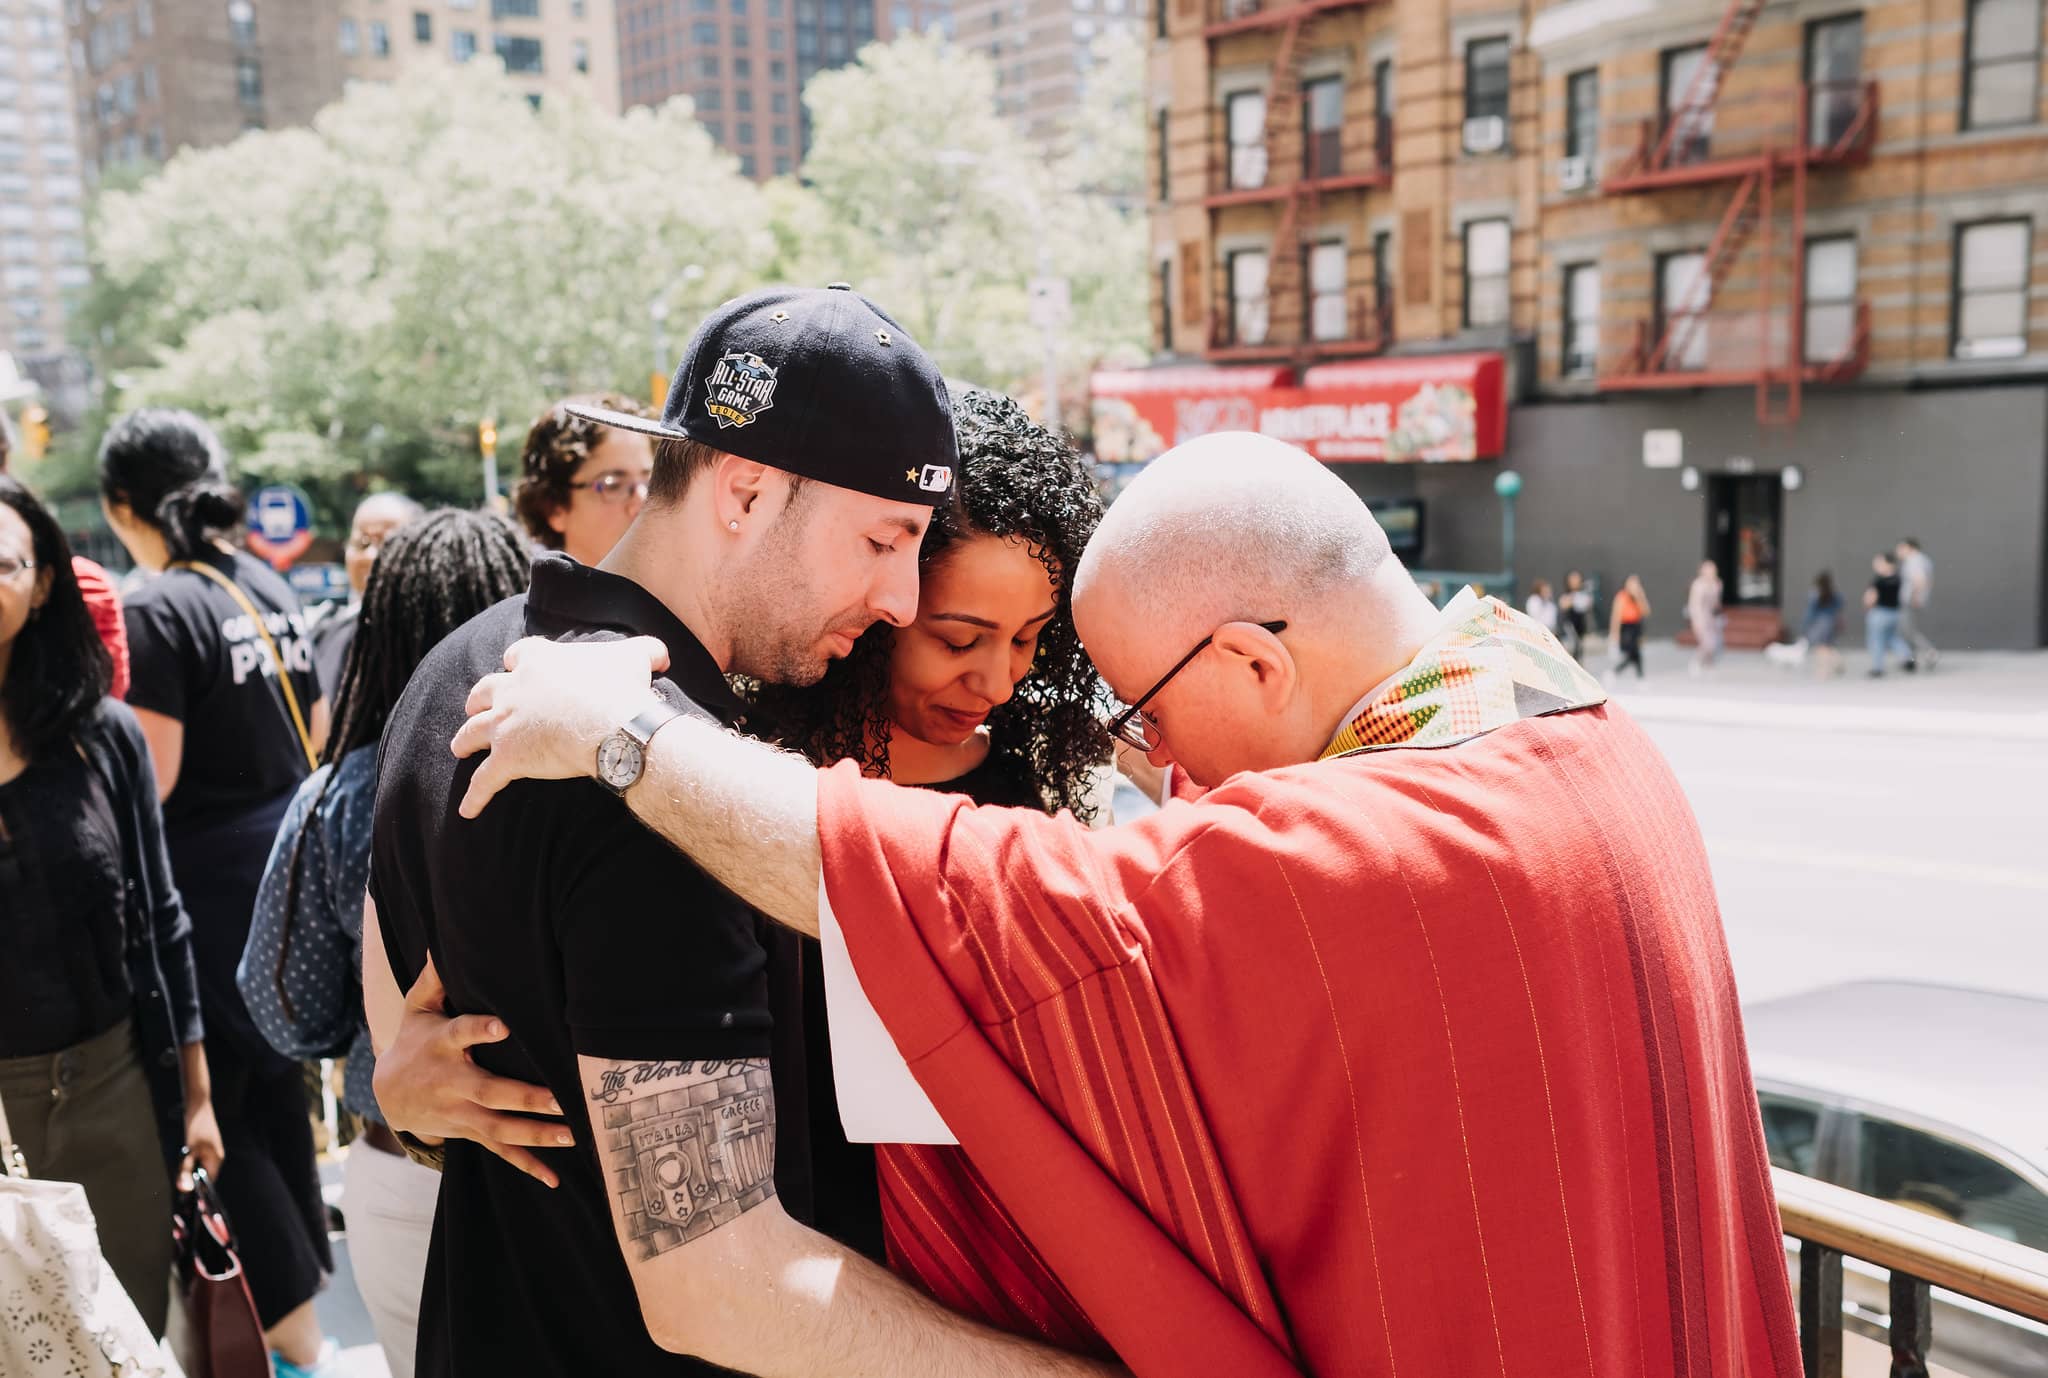 prayer-group-welcome-community-st-francis-de-sales-church-new-york-city.jpg